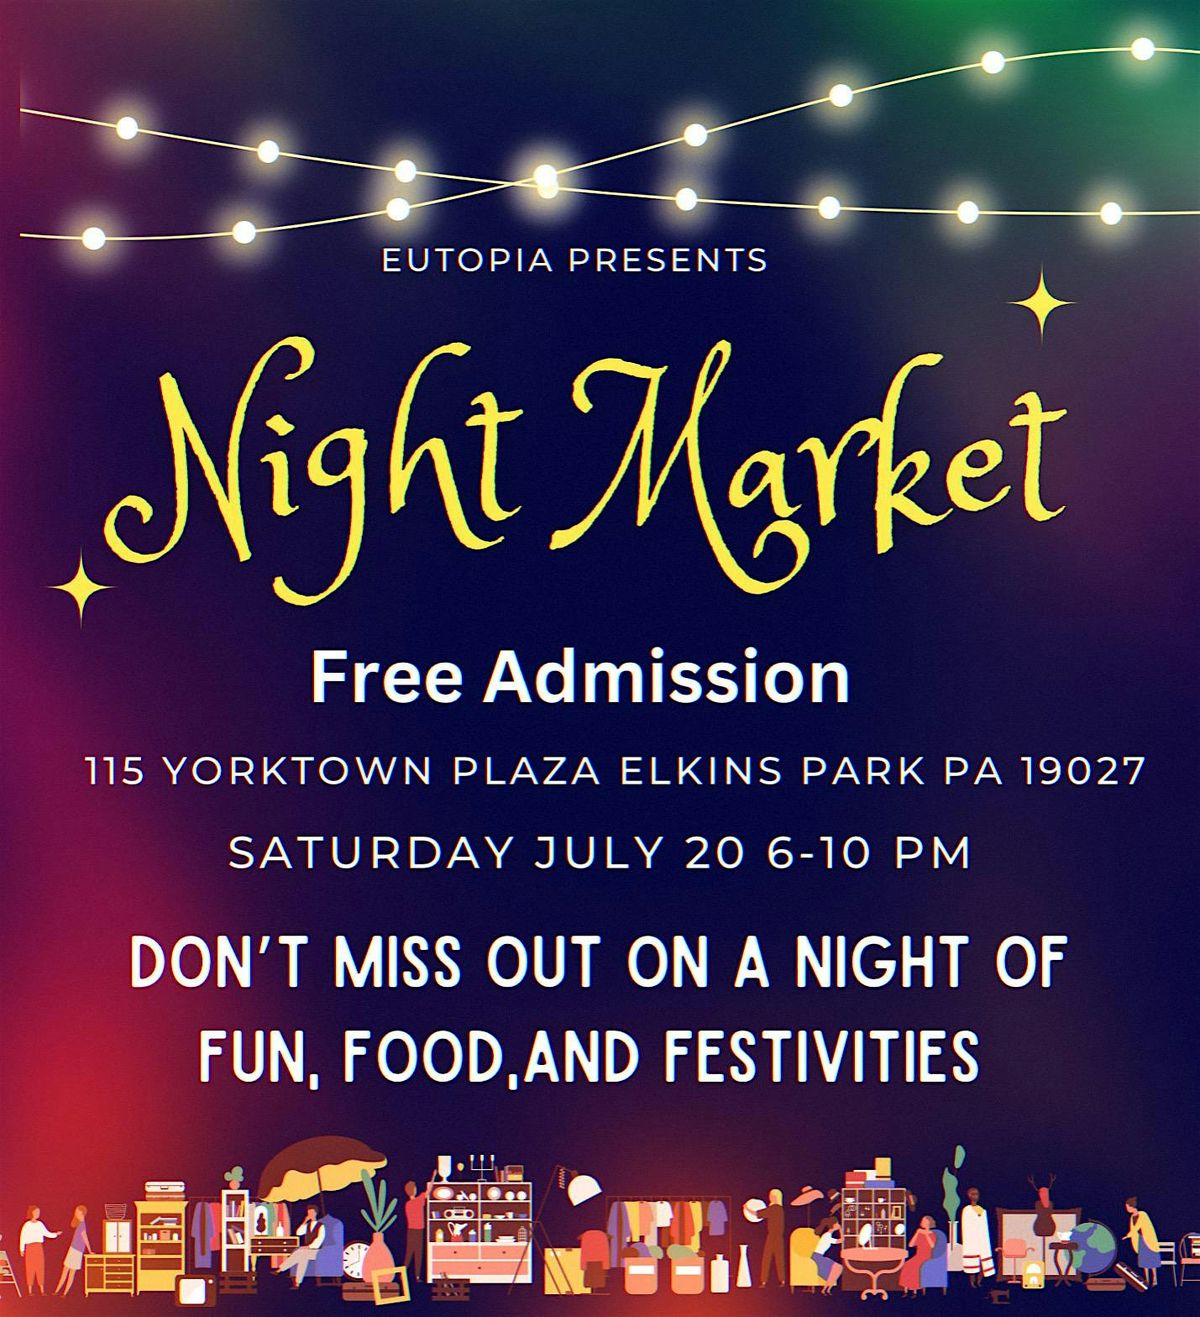 Eutopia's Vending Night Market